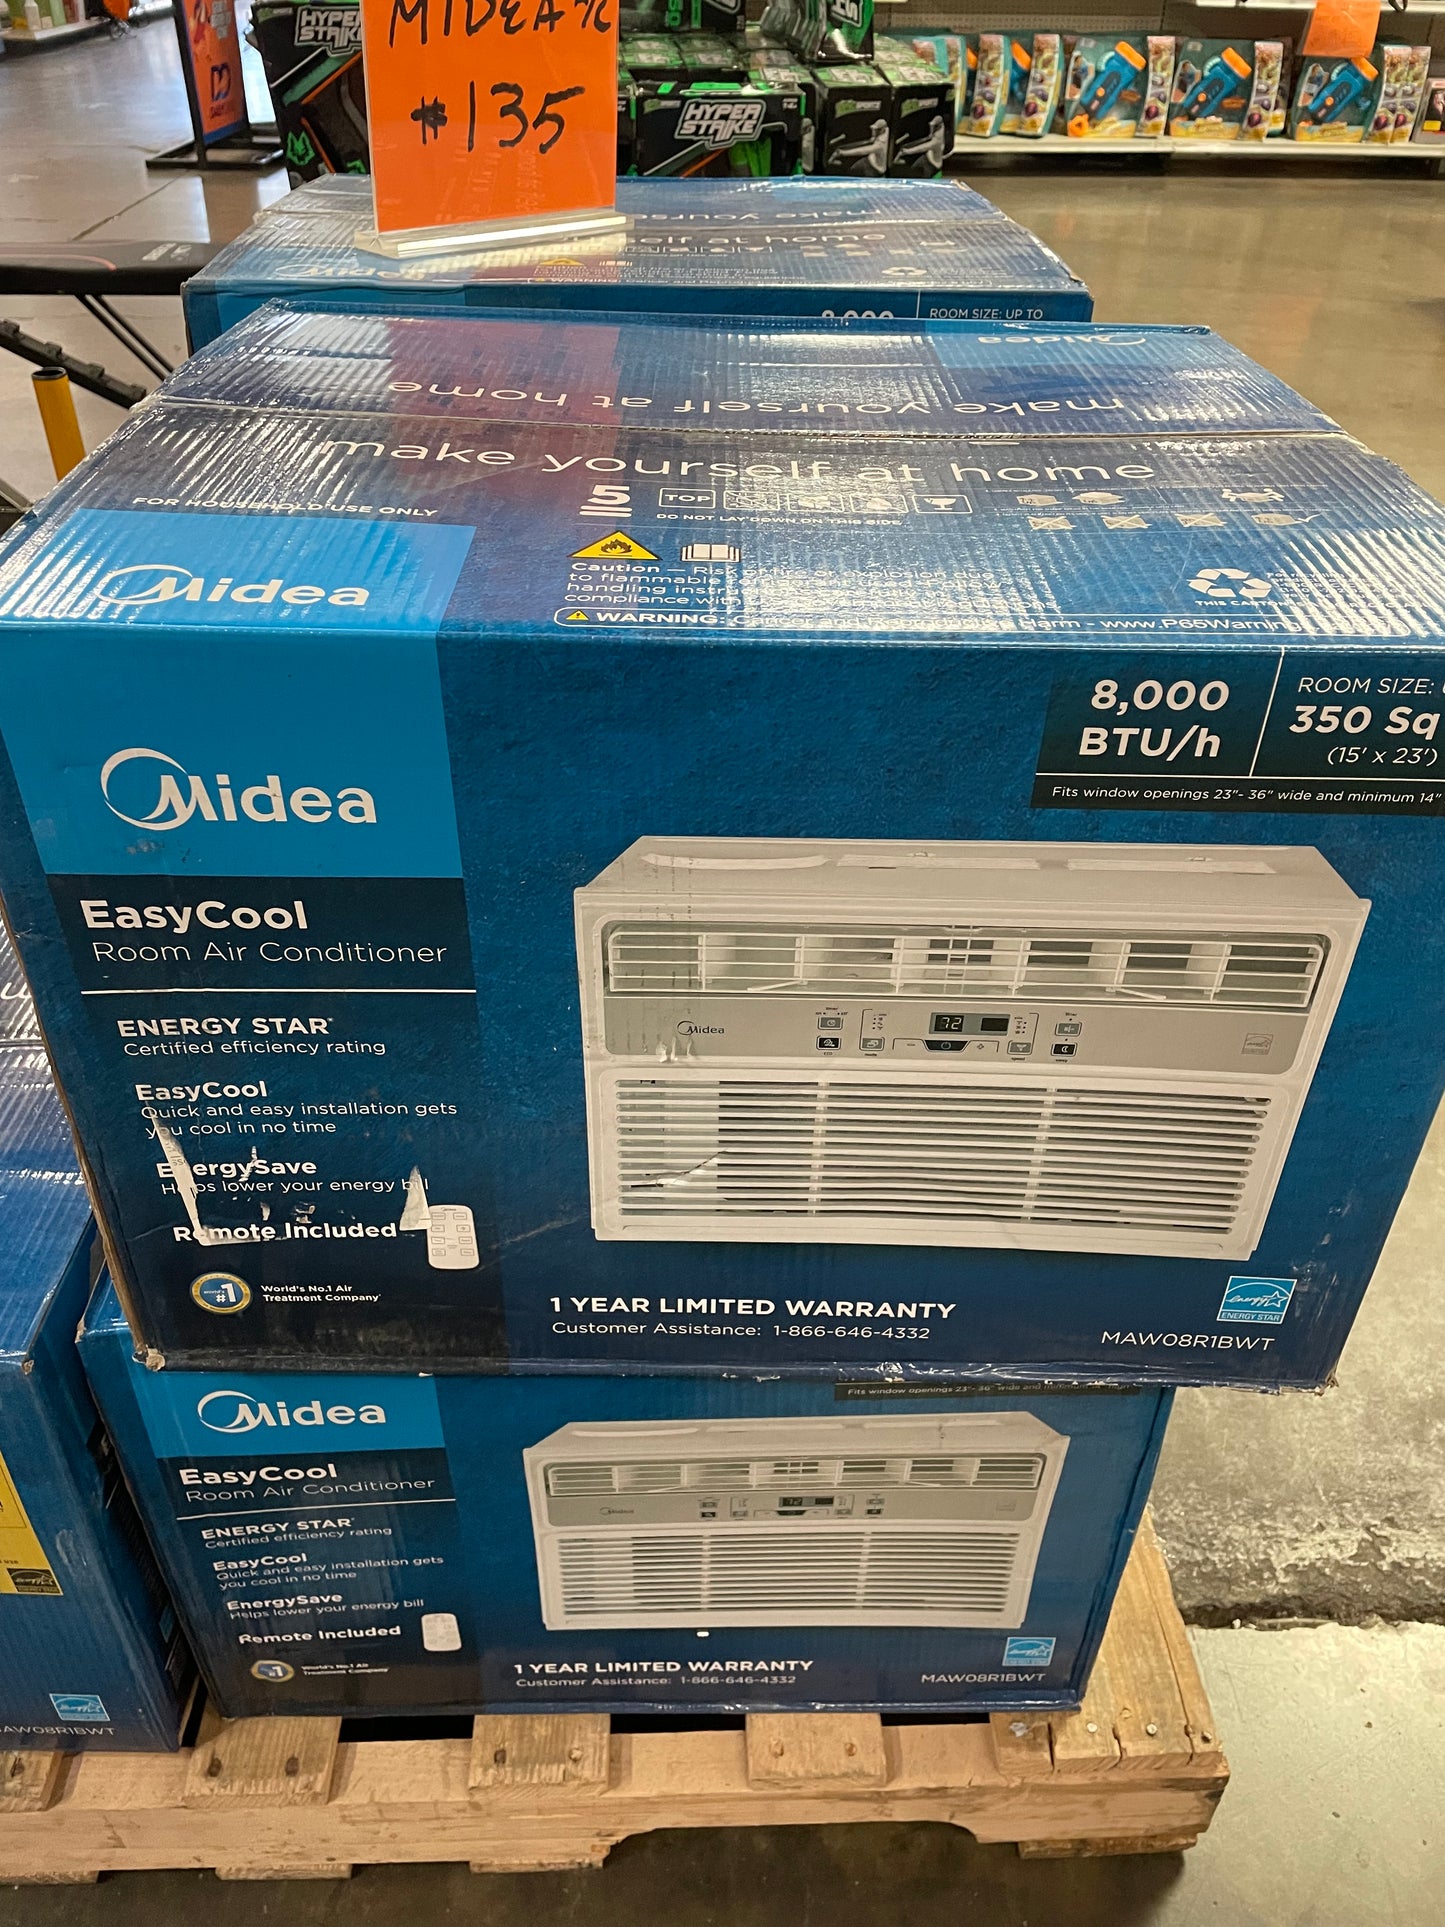 LOT #39 Midea 8,000 BTU Window Air Conditioner (Quantity 24. Retail $9600) PICKUP ONLY!